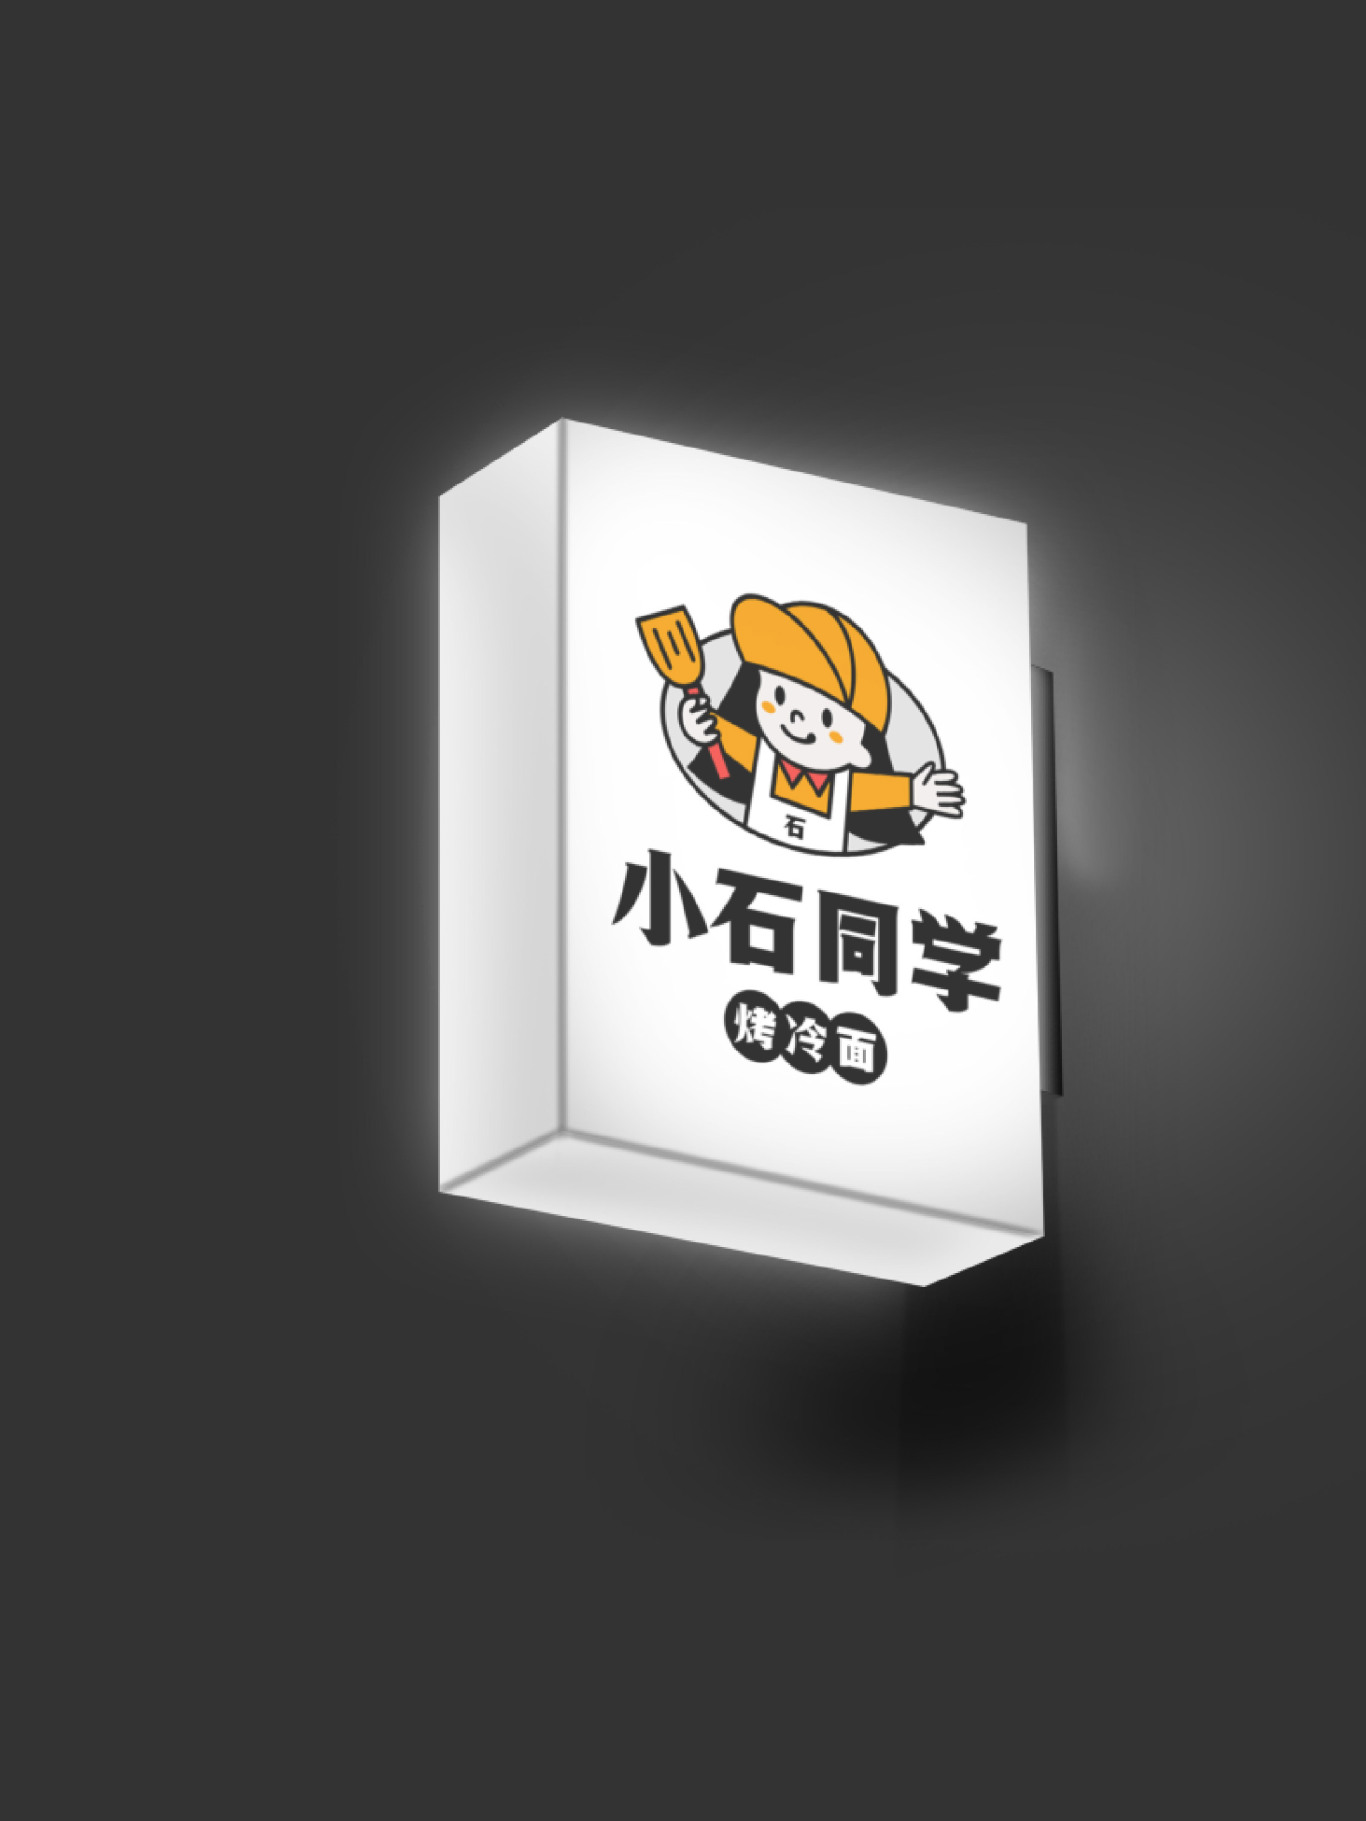 小石同学（烤冷面店logo）图3